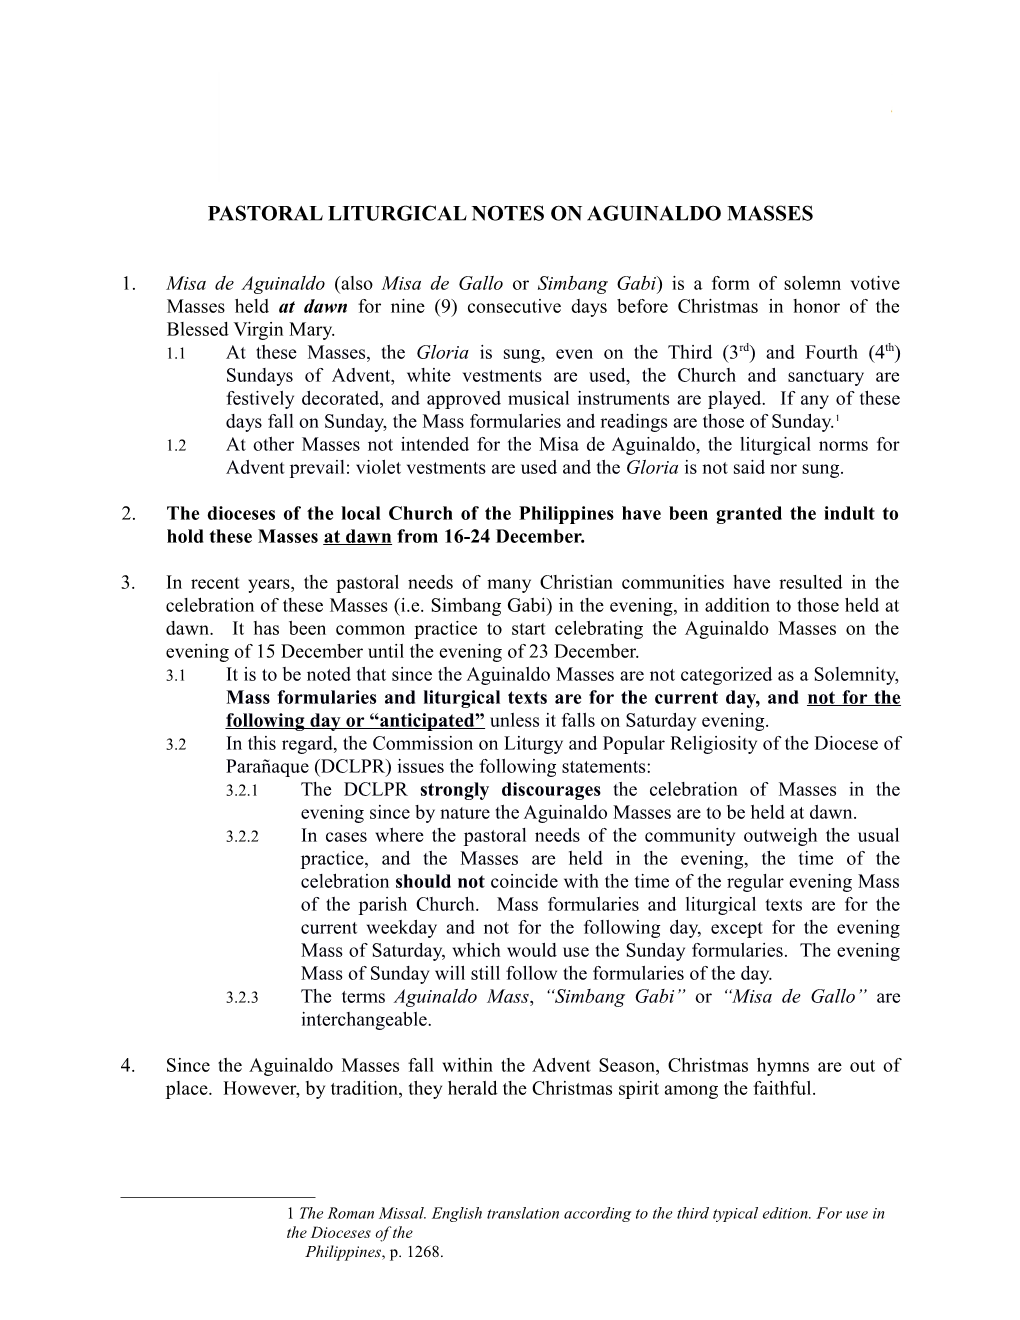 Pastoral Liturgical Notes on Aguinaldo Masses